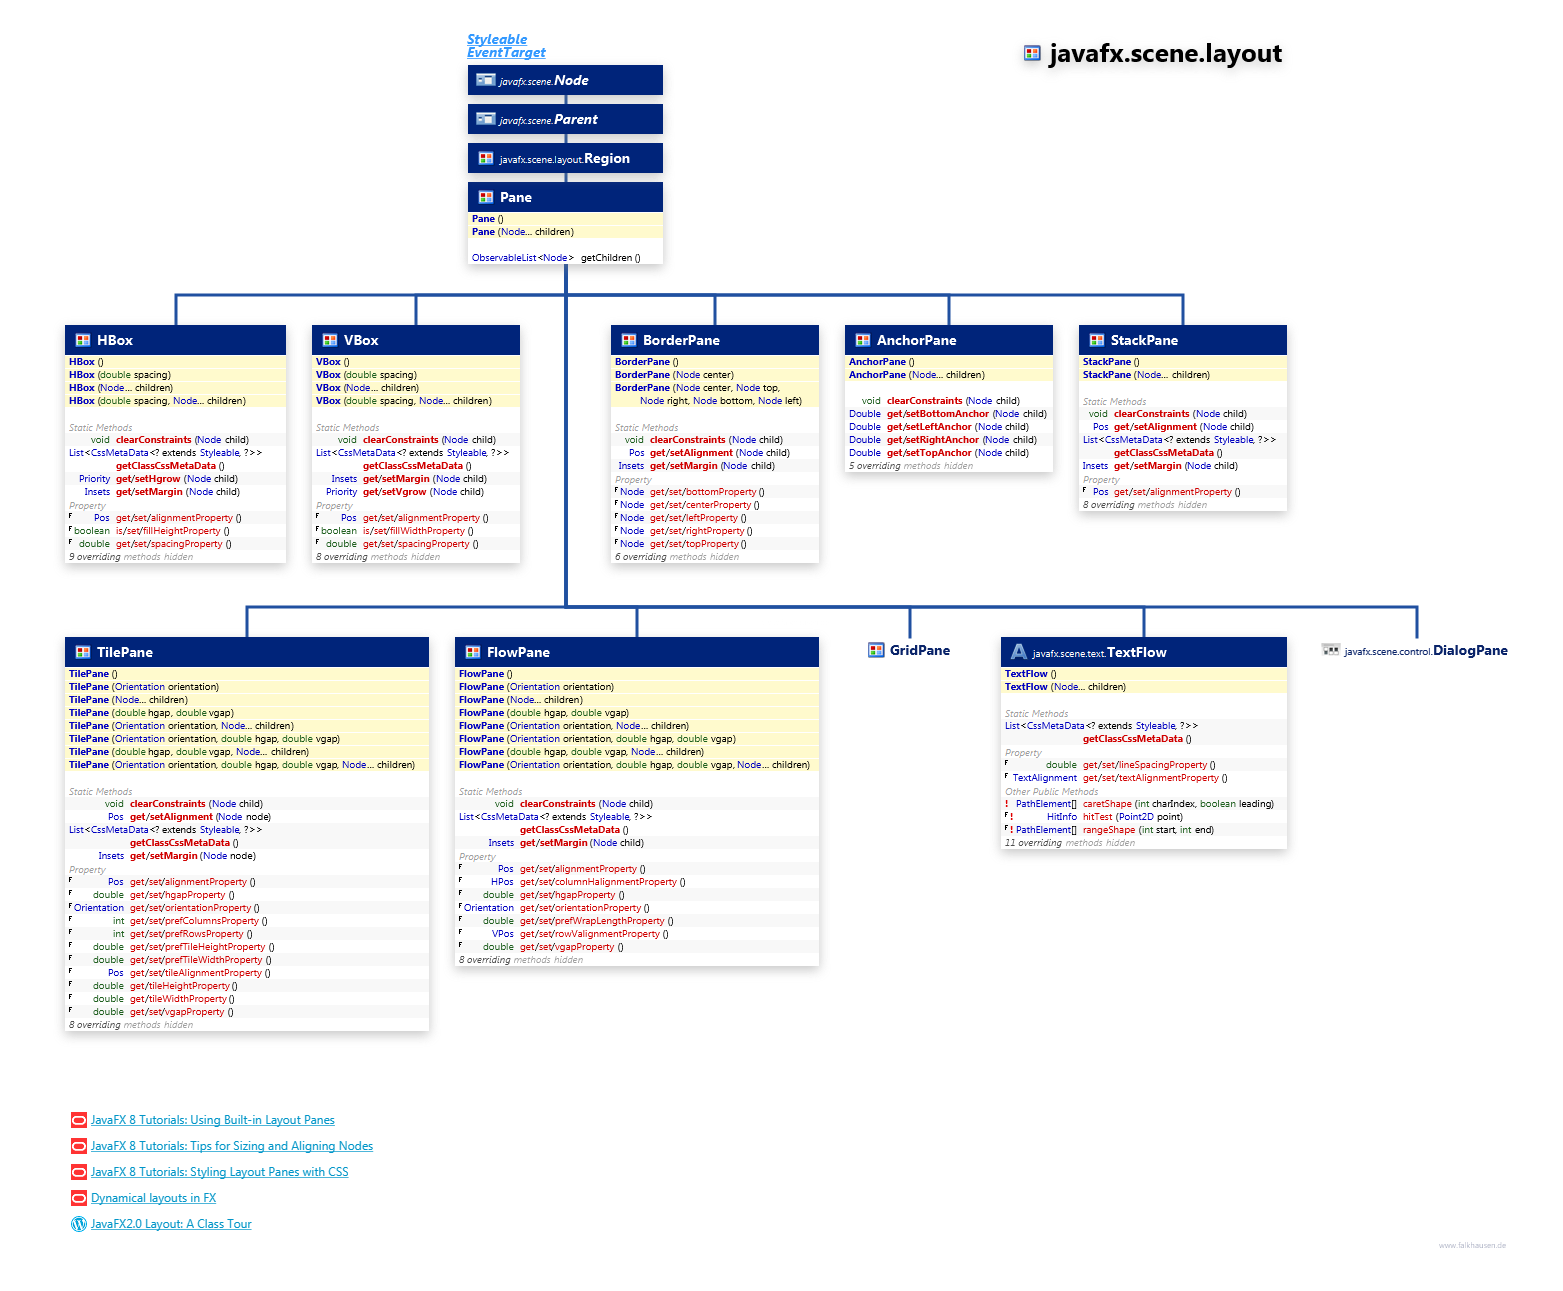 javafx.scene.layout Pane class diagram and api documentation for JavaFX 10